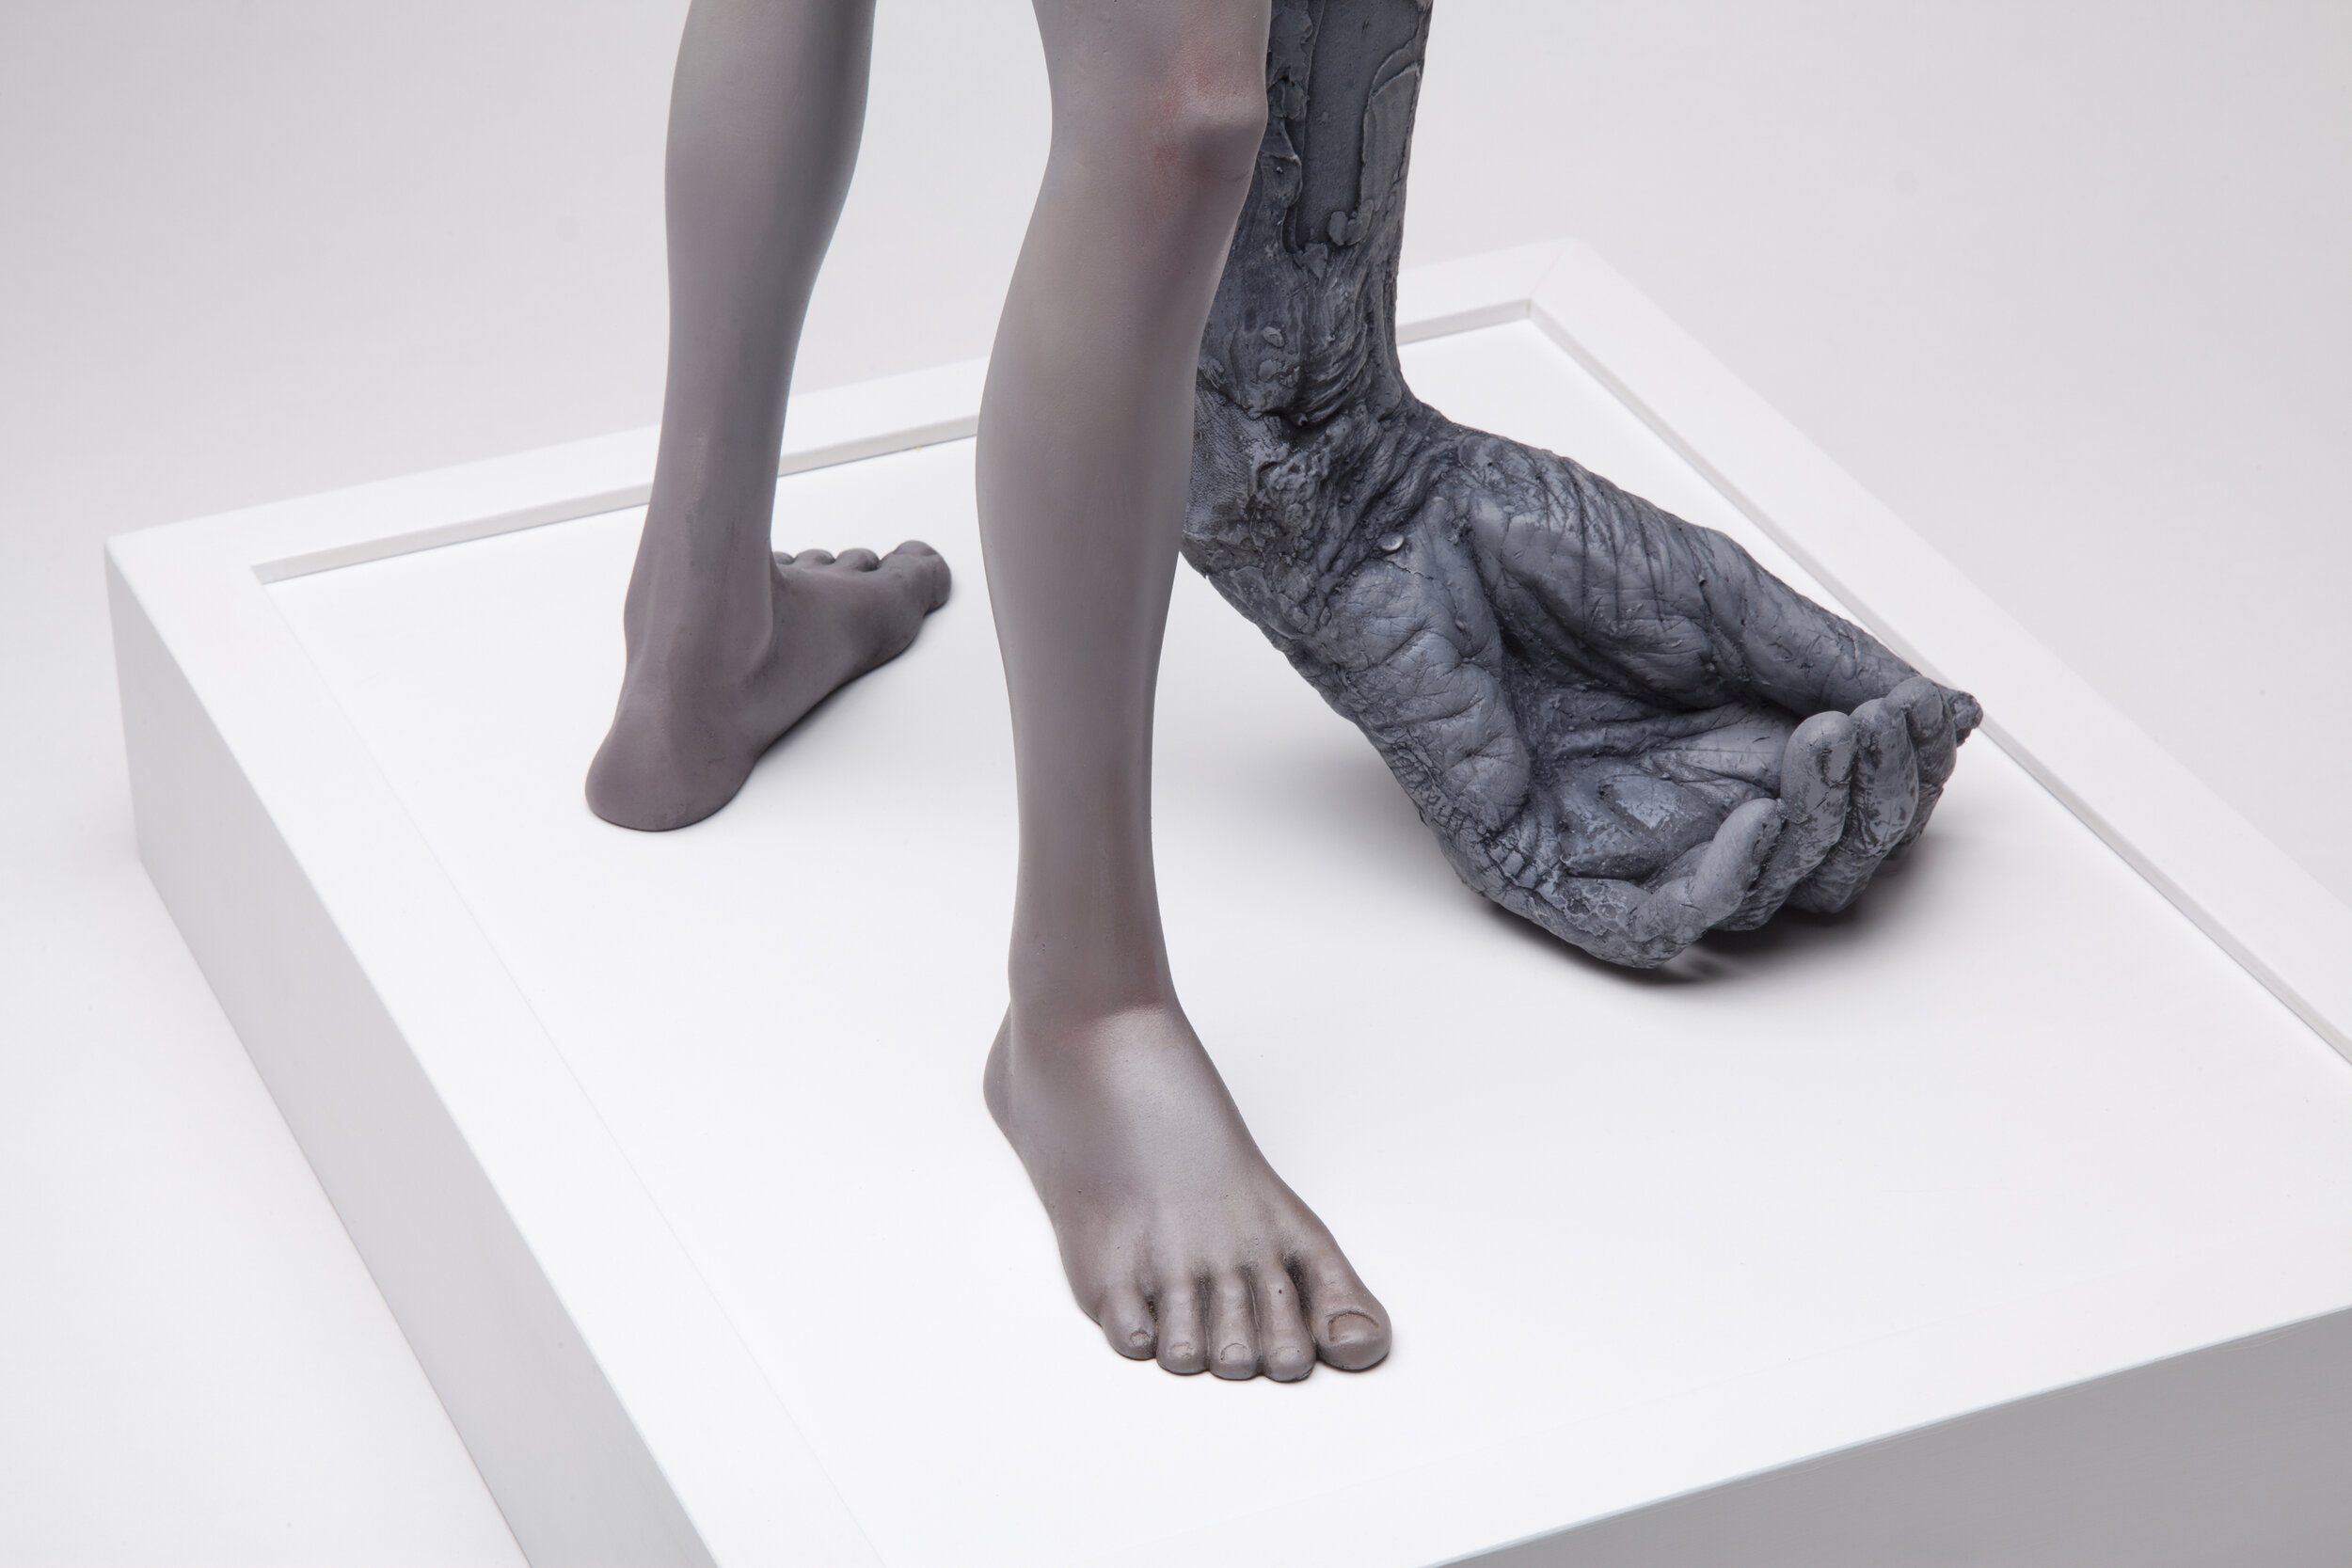 jesse-thompson-Sculpture-Longarm-Dress-Up close-up 03.jpg